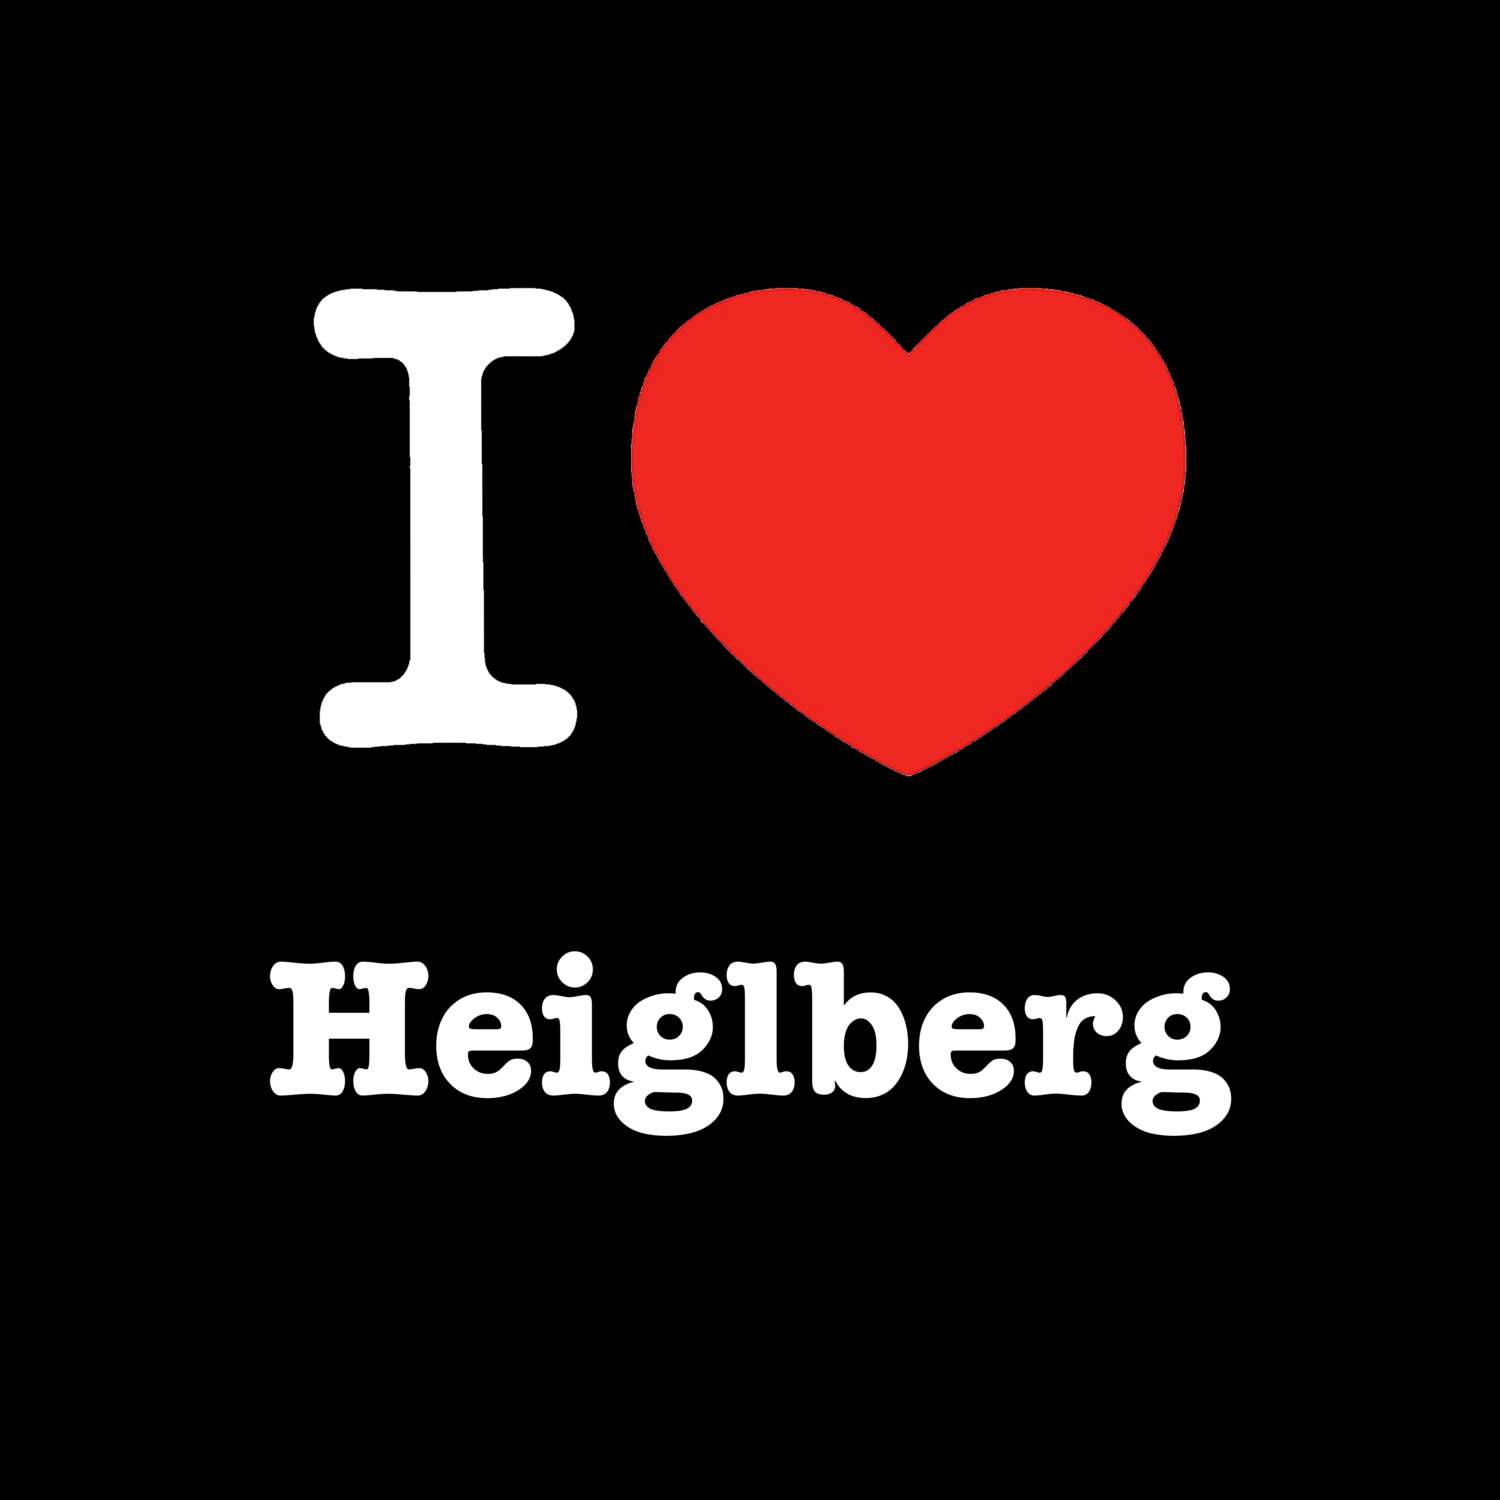 Heiglberg T-Shirt »I love«